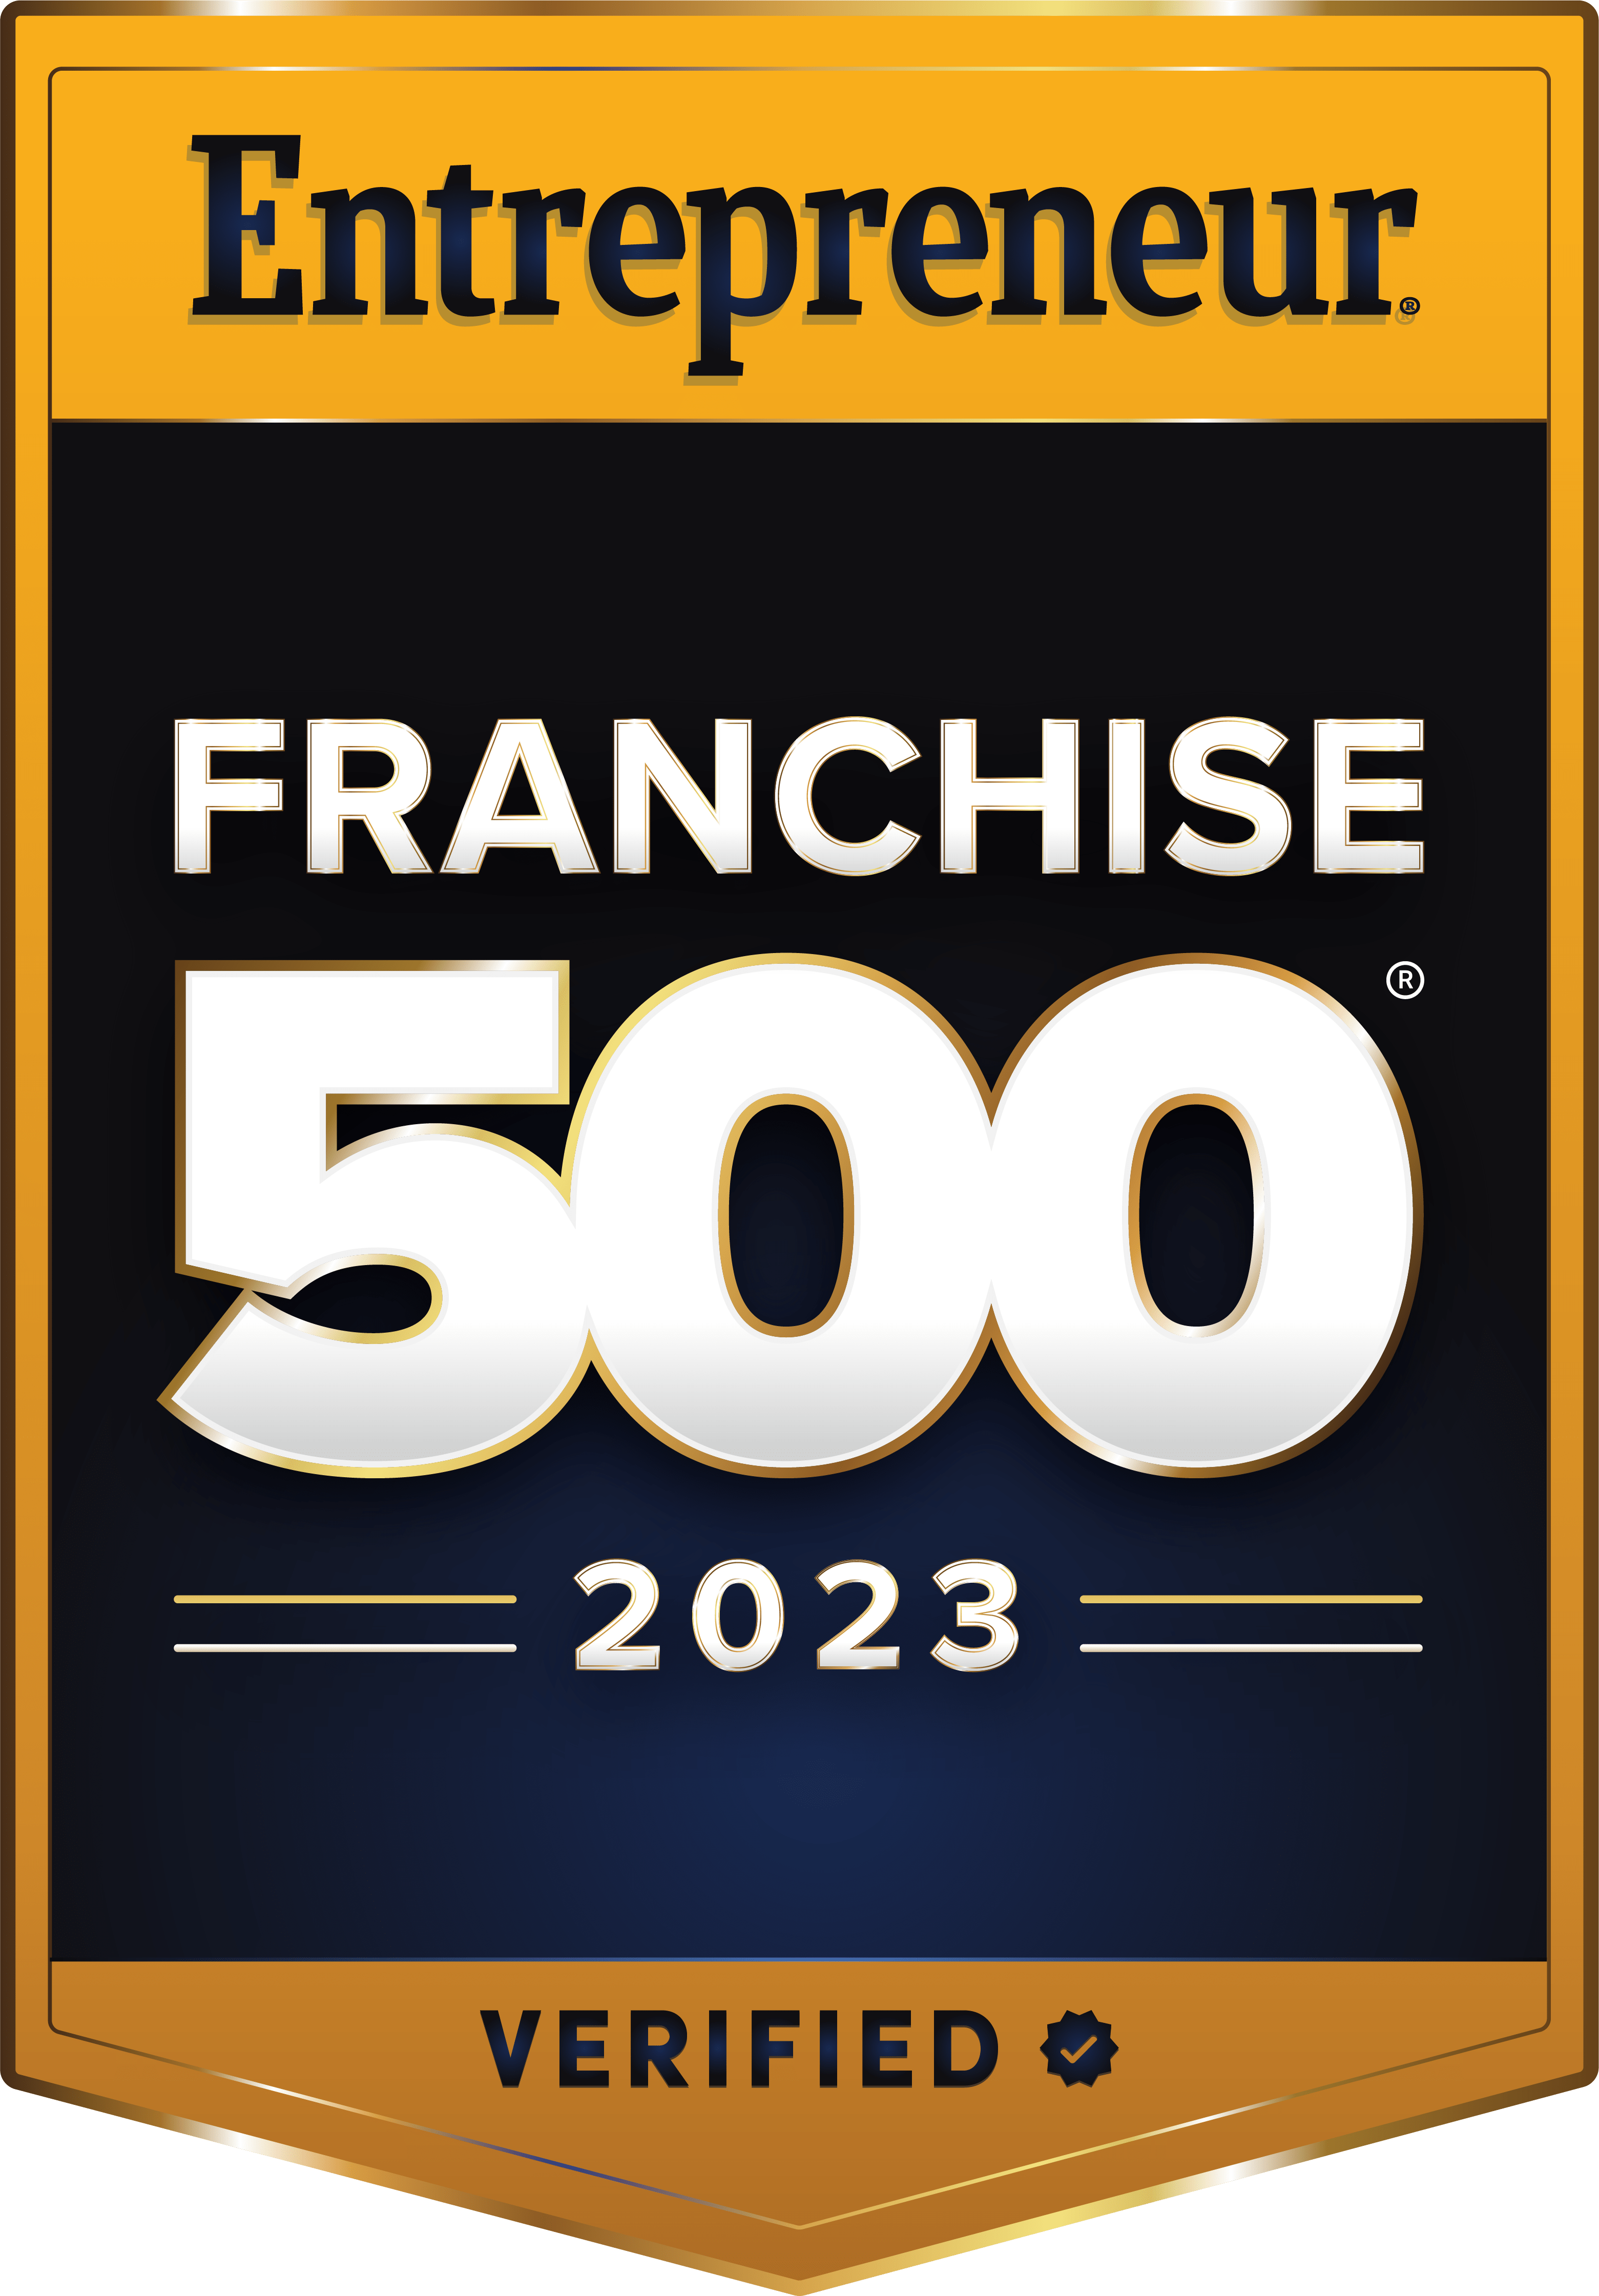 Entrepreneur Franchise 500 2023, Verified